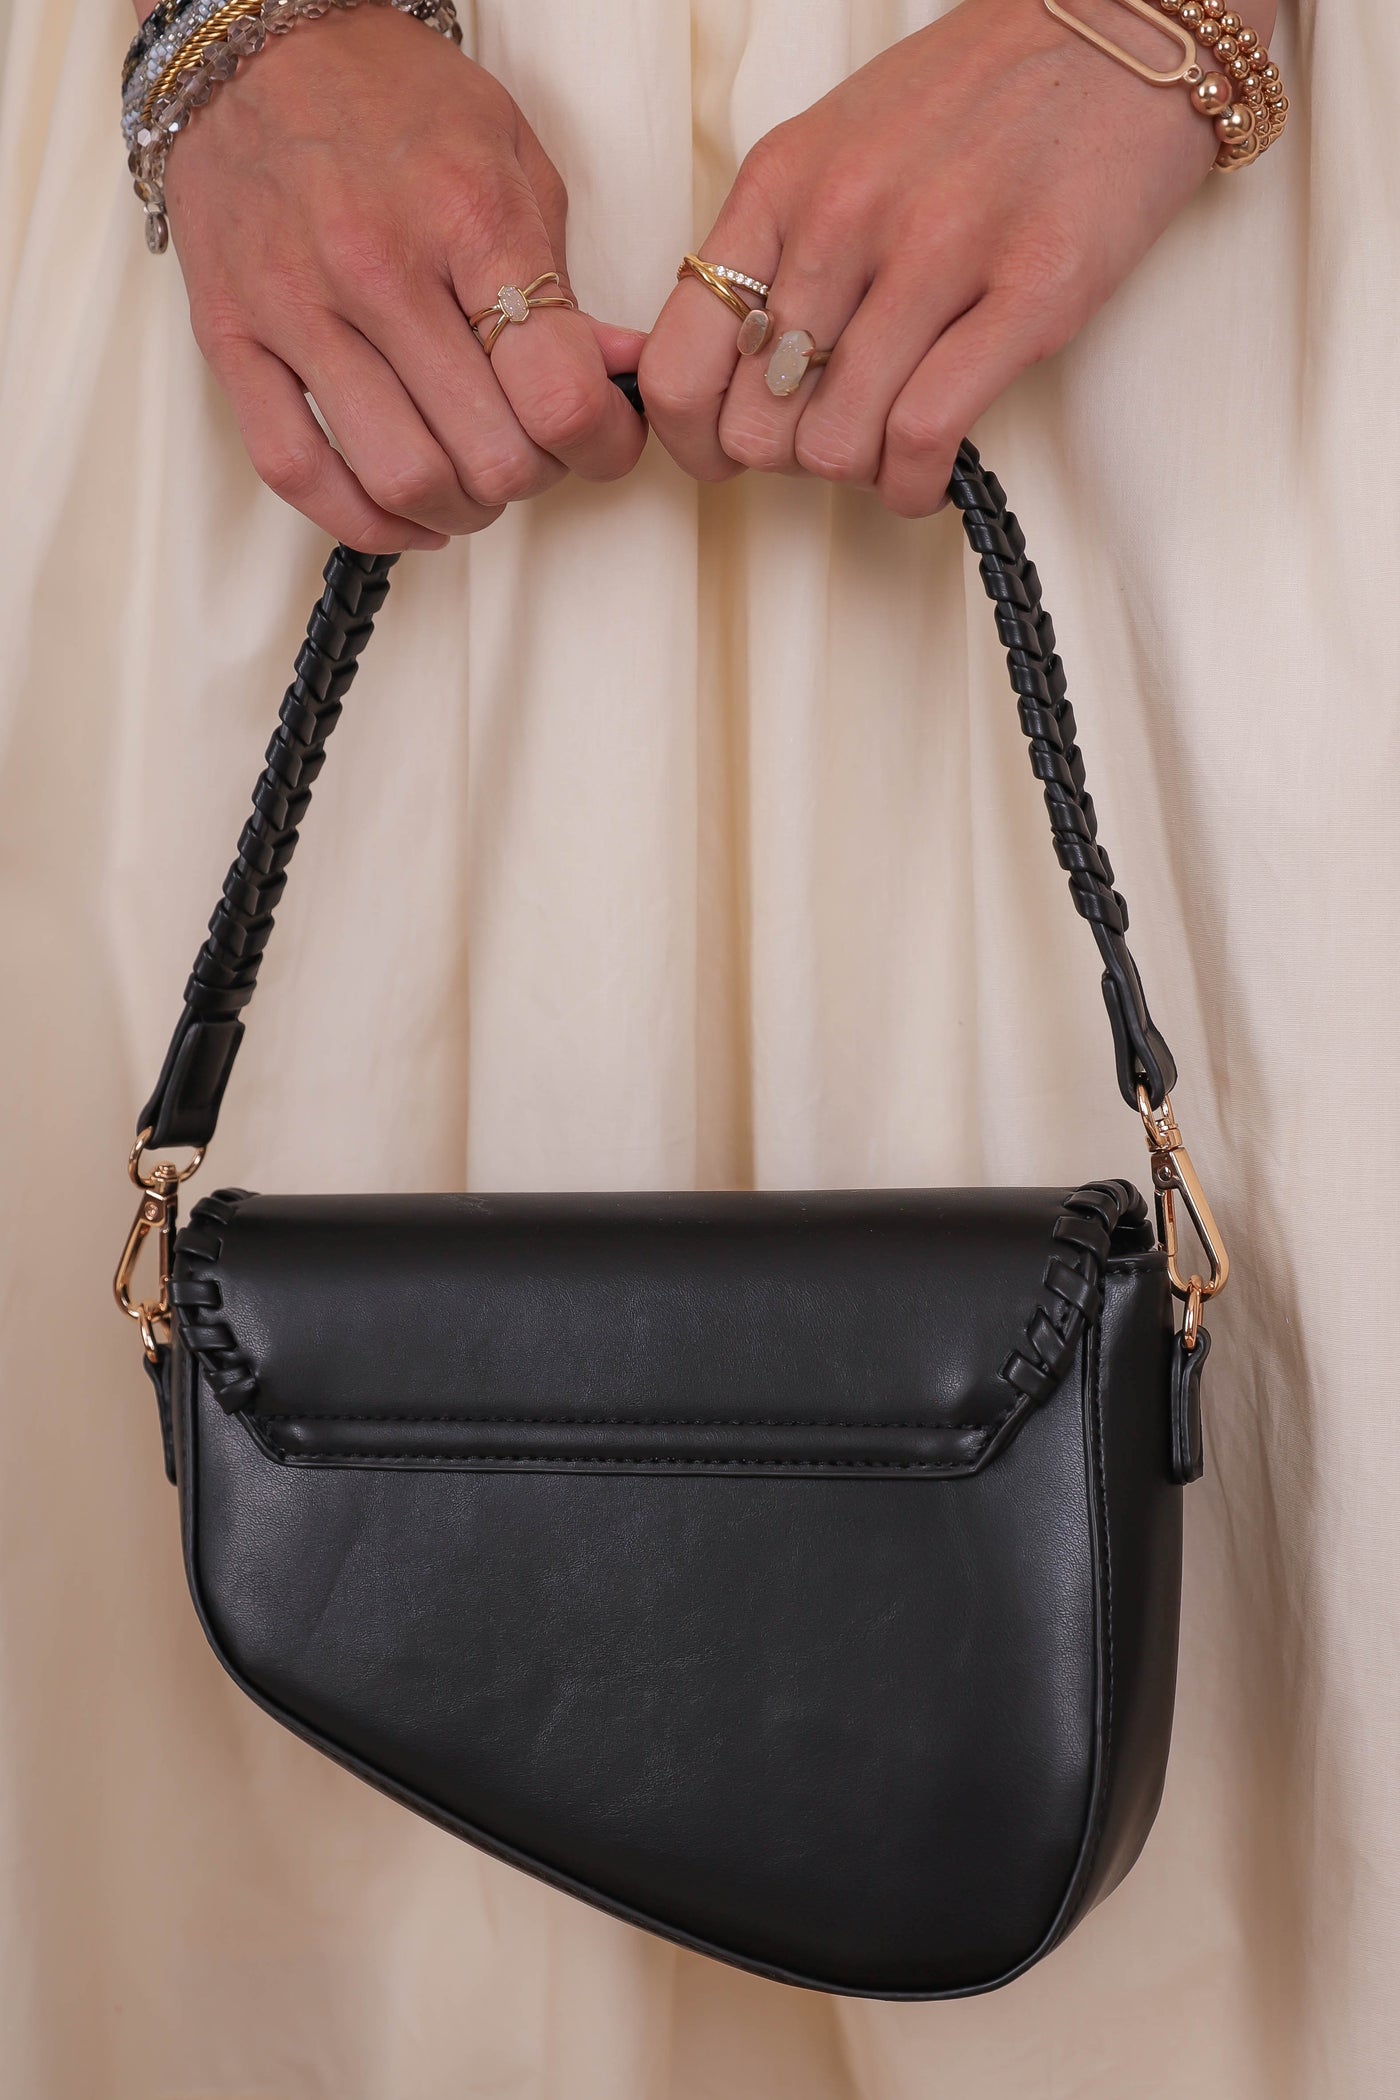 Black Vegan Leather Handbag- Women's Designer Dupe Purse- Urban Expressions Purse